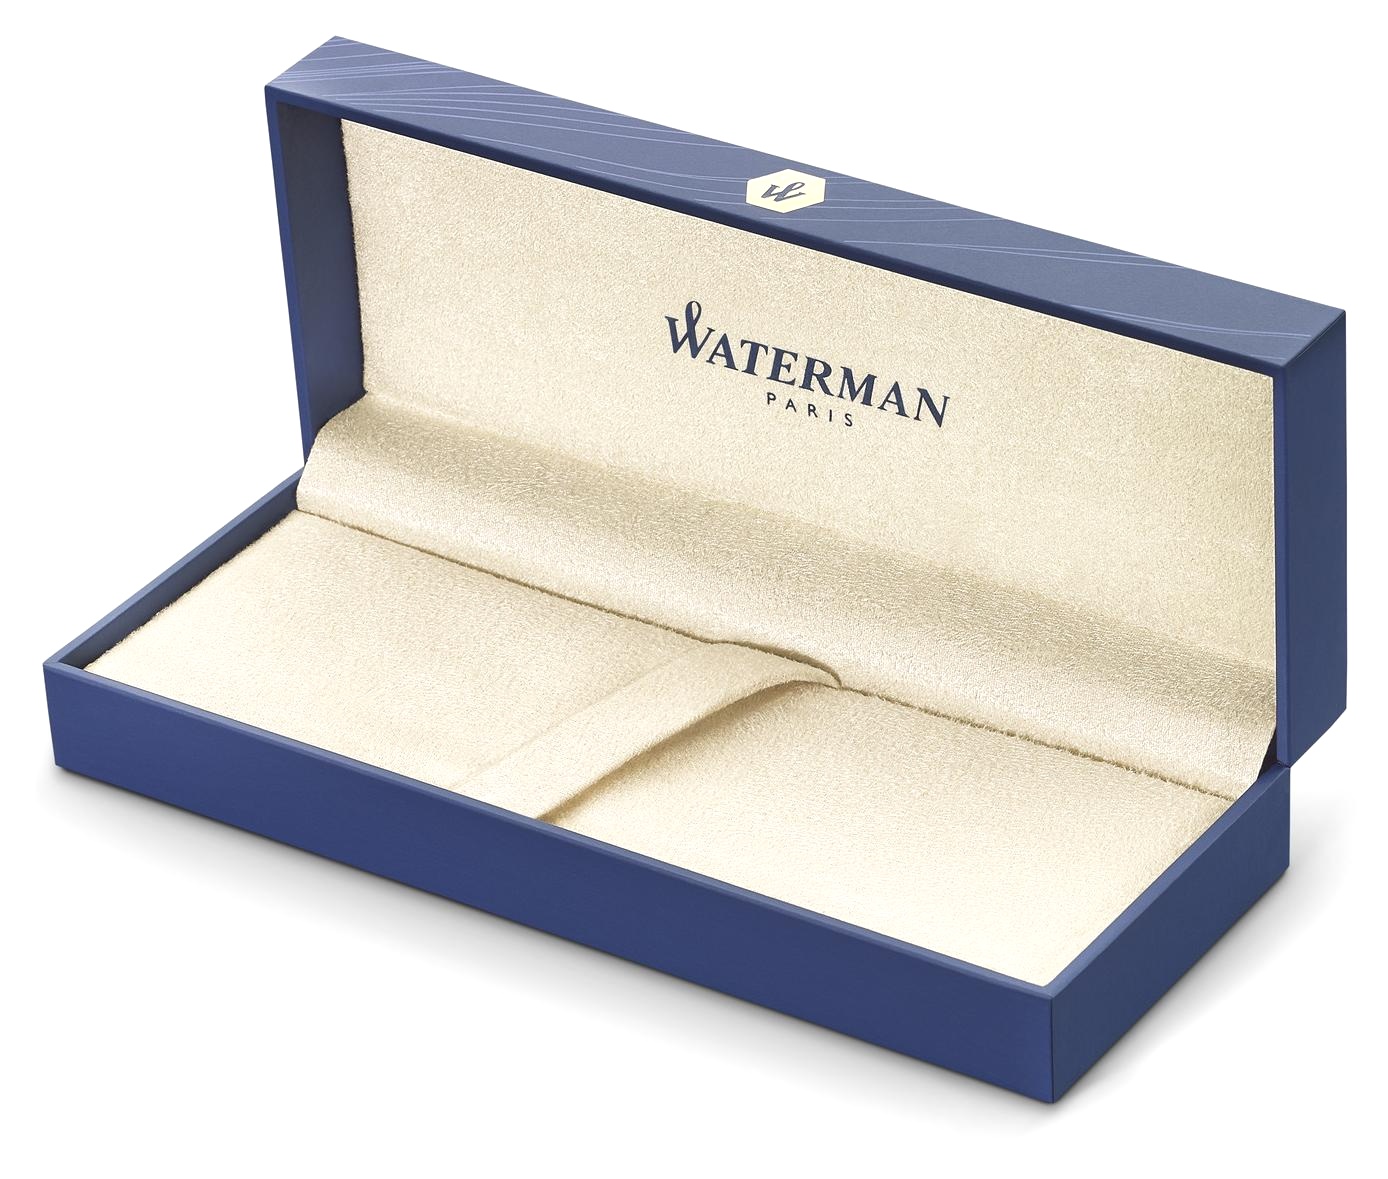  Пустая подарочная коробка для ручек Waterman, фото 2